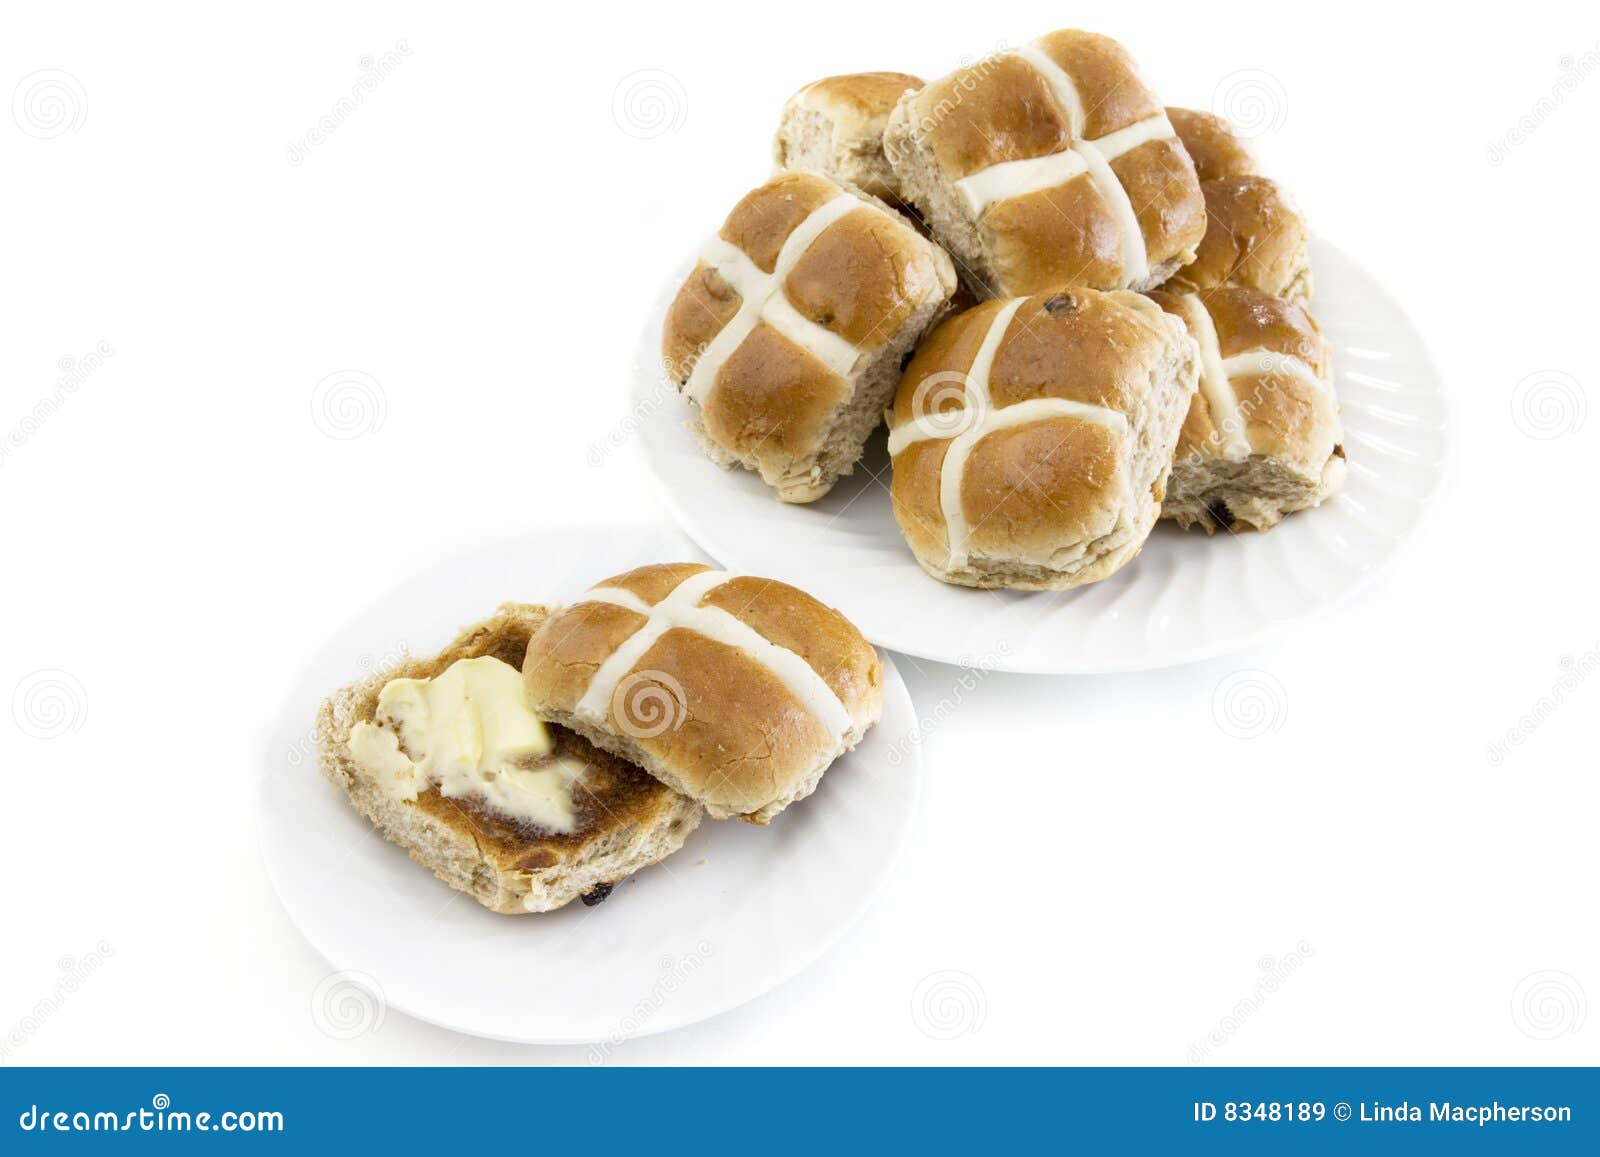 free clipart hot cross buns - photo #27